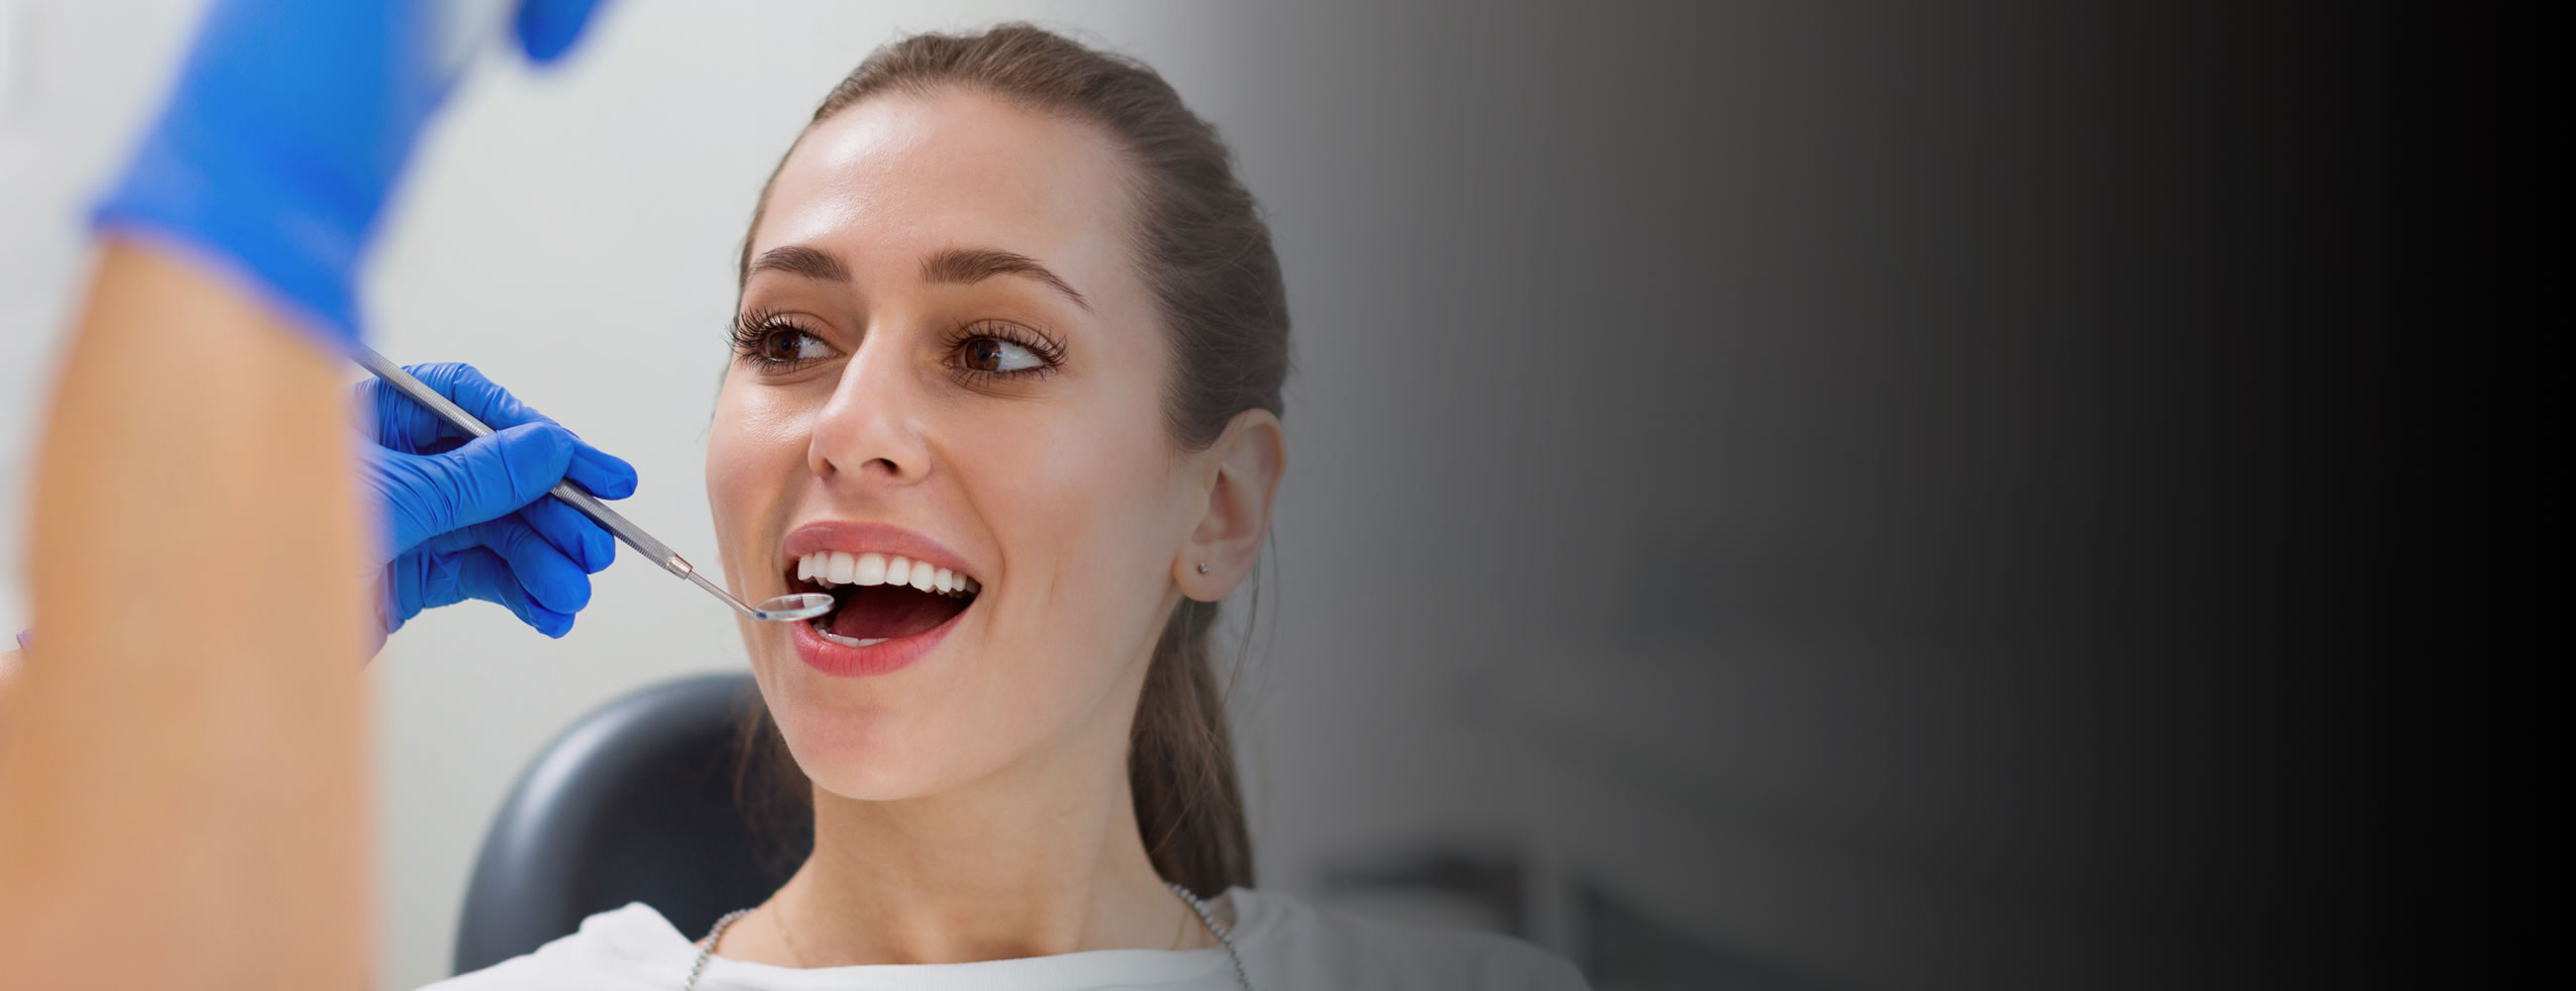 Why choose Bespoke Dental in Reading